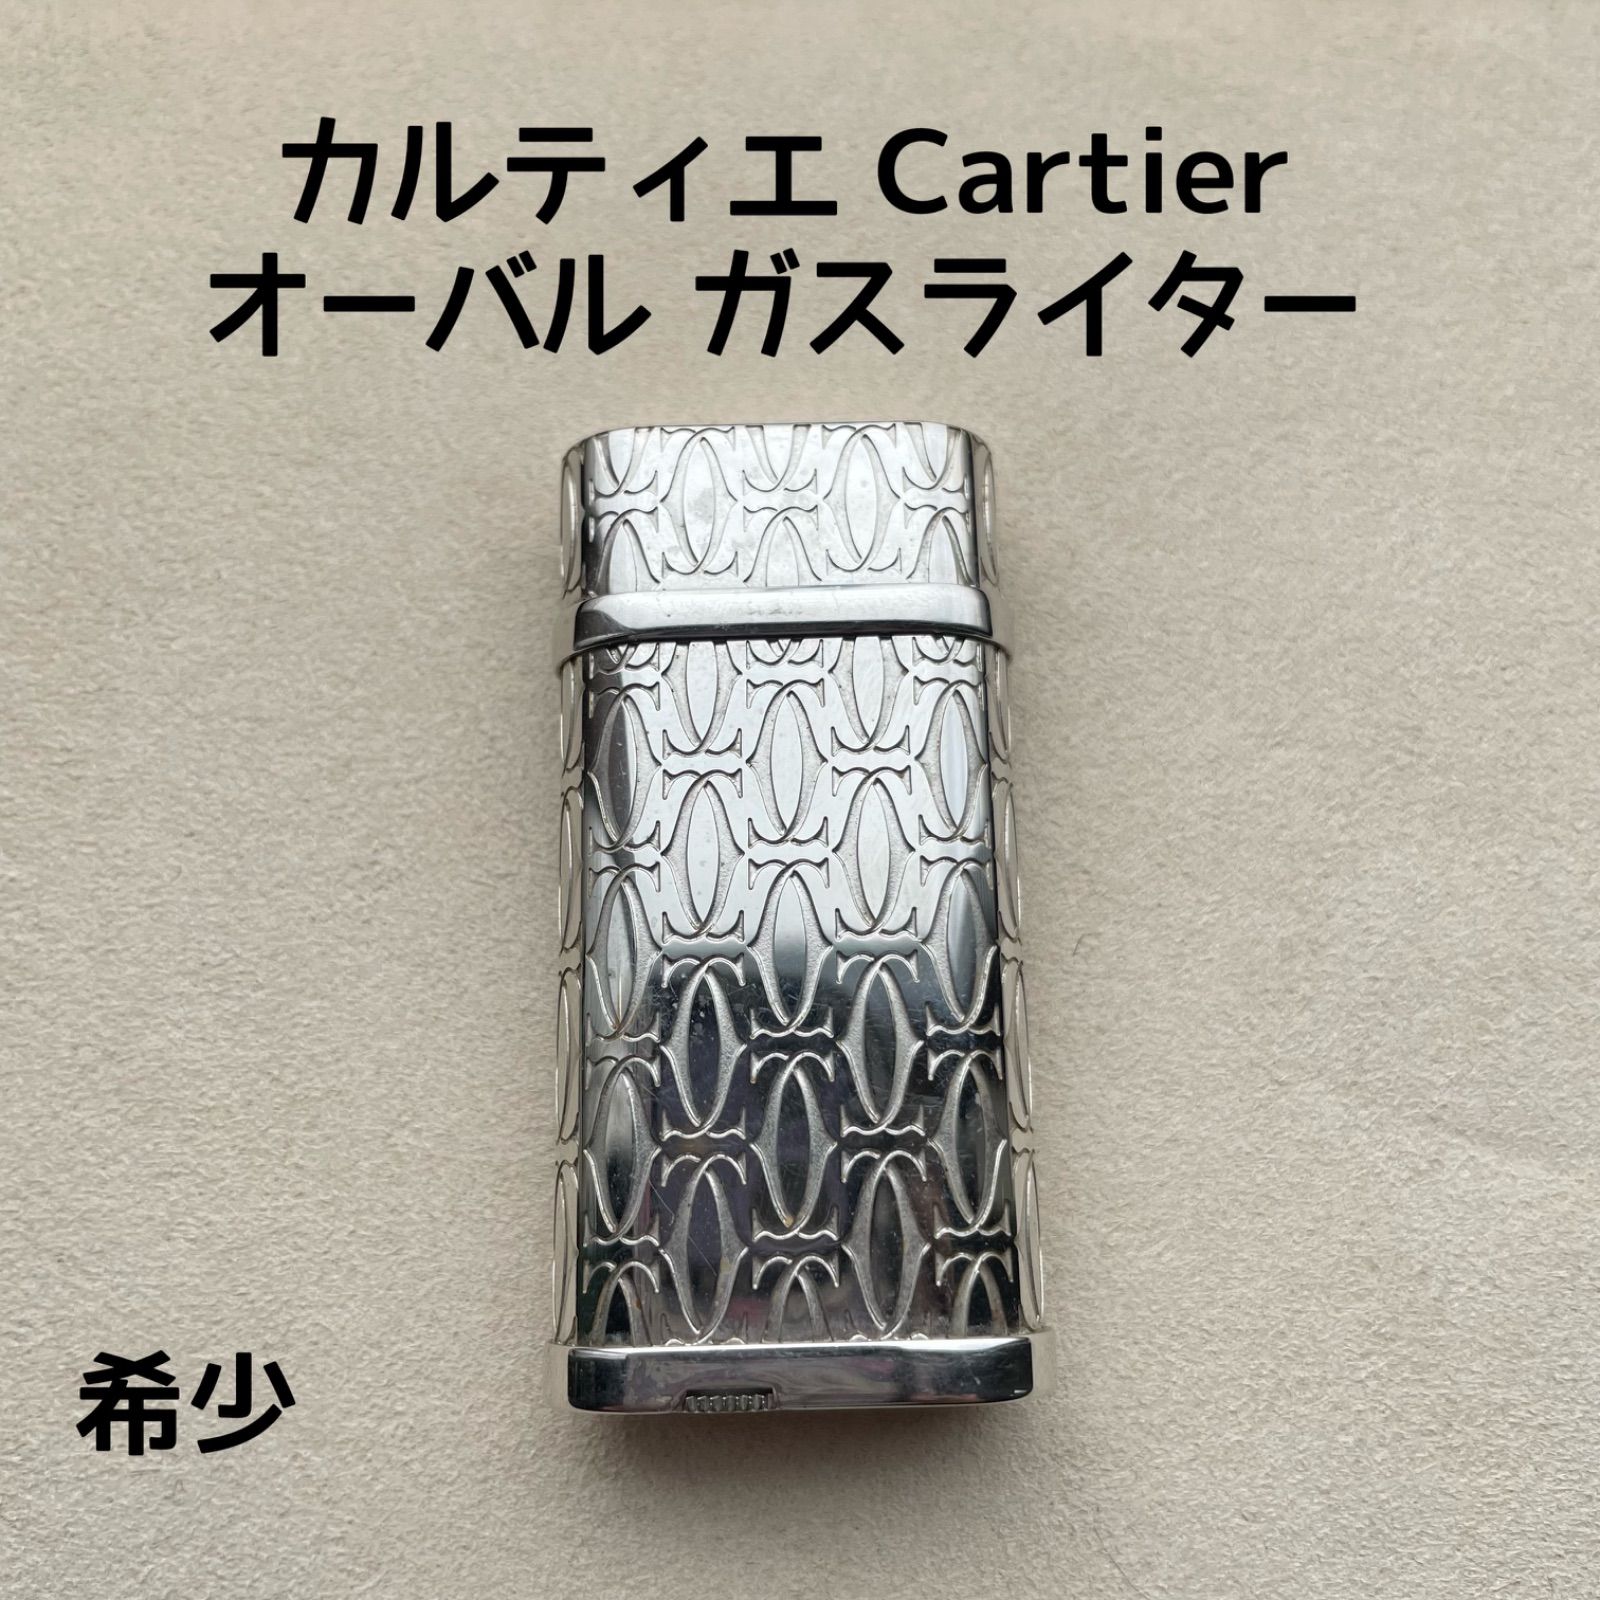 Cartier Lighter　カルティエ オーバル ガスライター 2C モチーフ プラチナフィニッシュ仕上げ カルチェ小物